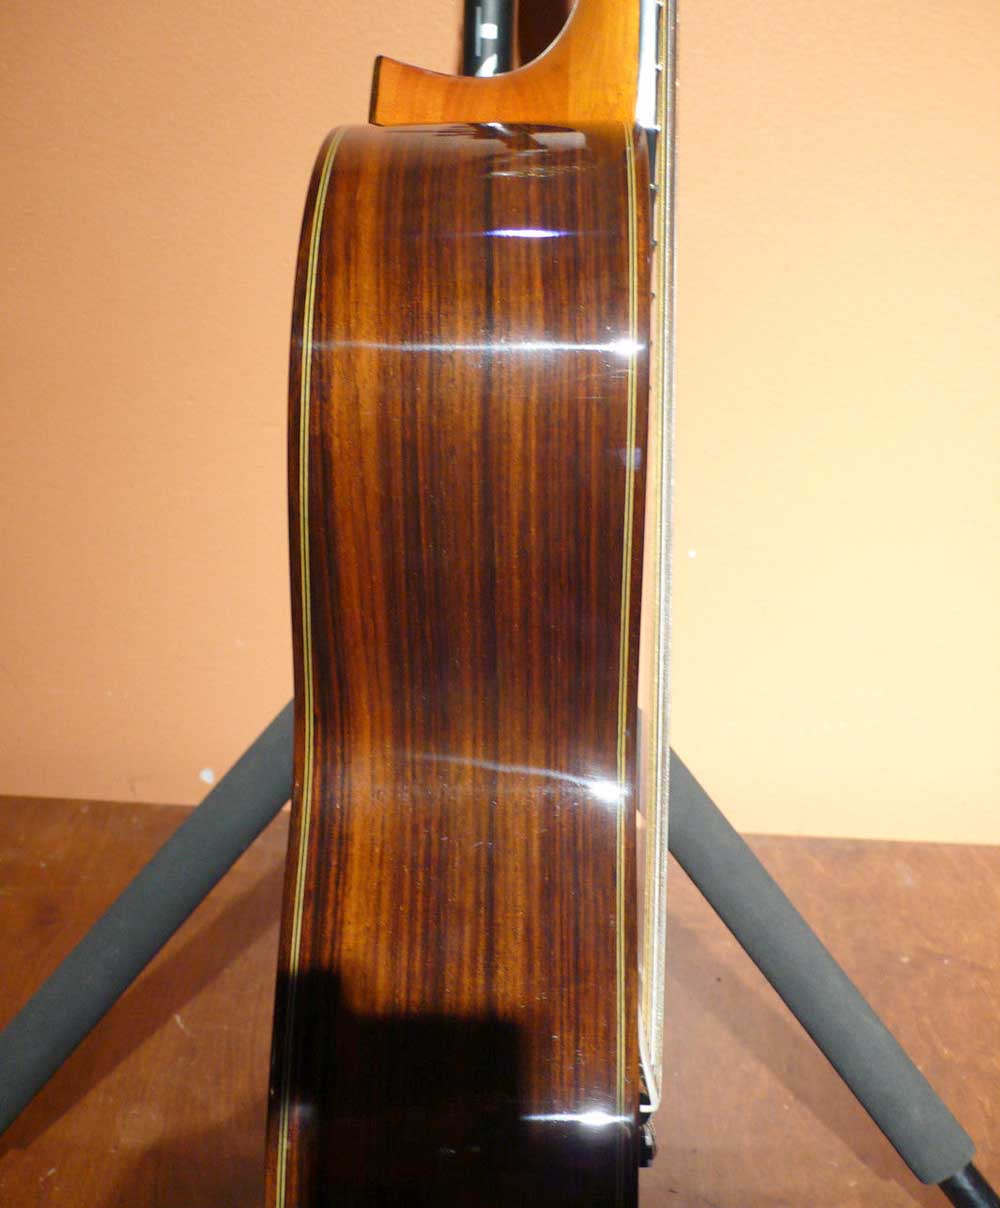 11-String Asturias Alto Classical Harp Guitar, by Wataru Tsuji, Japan